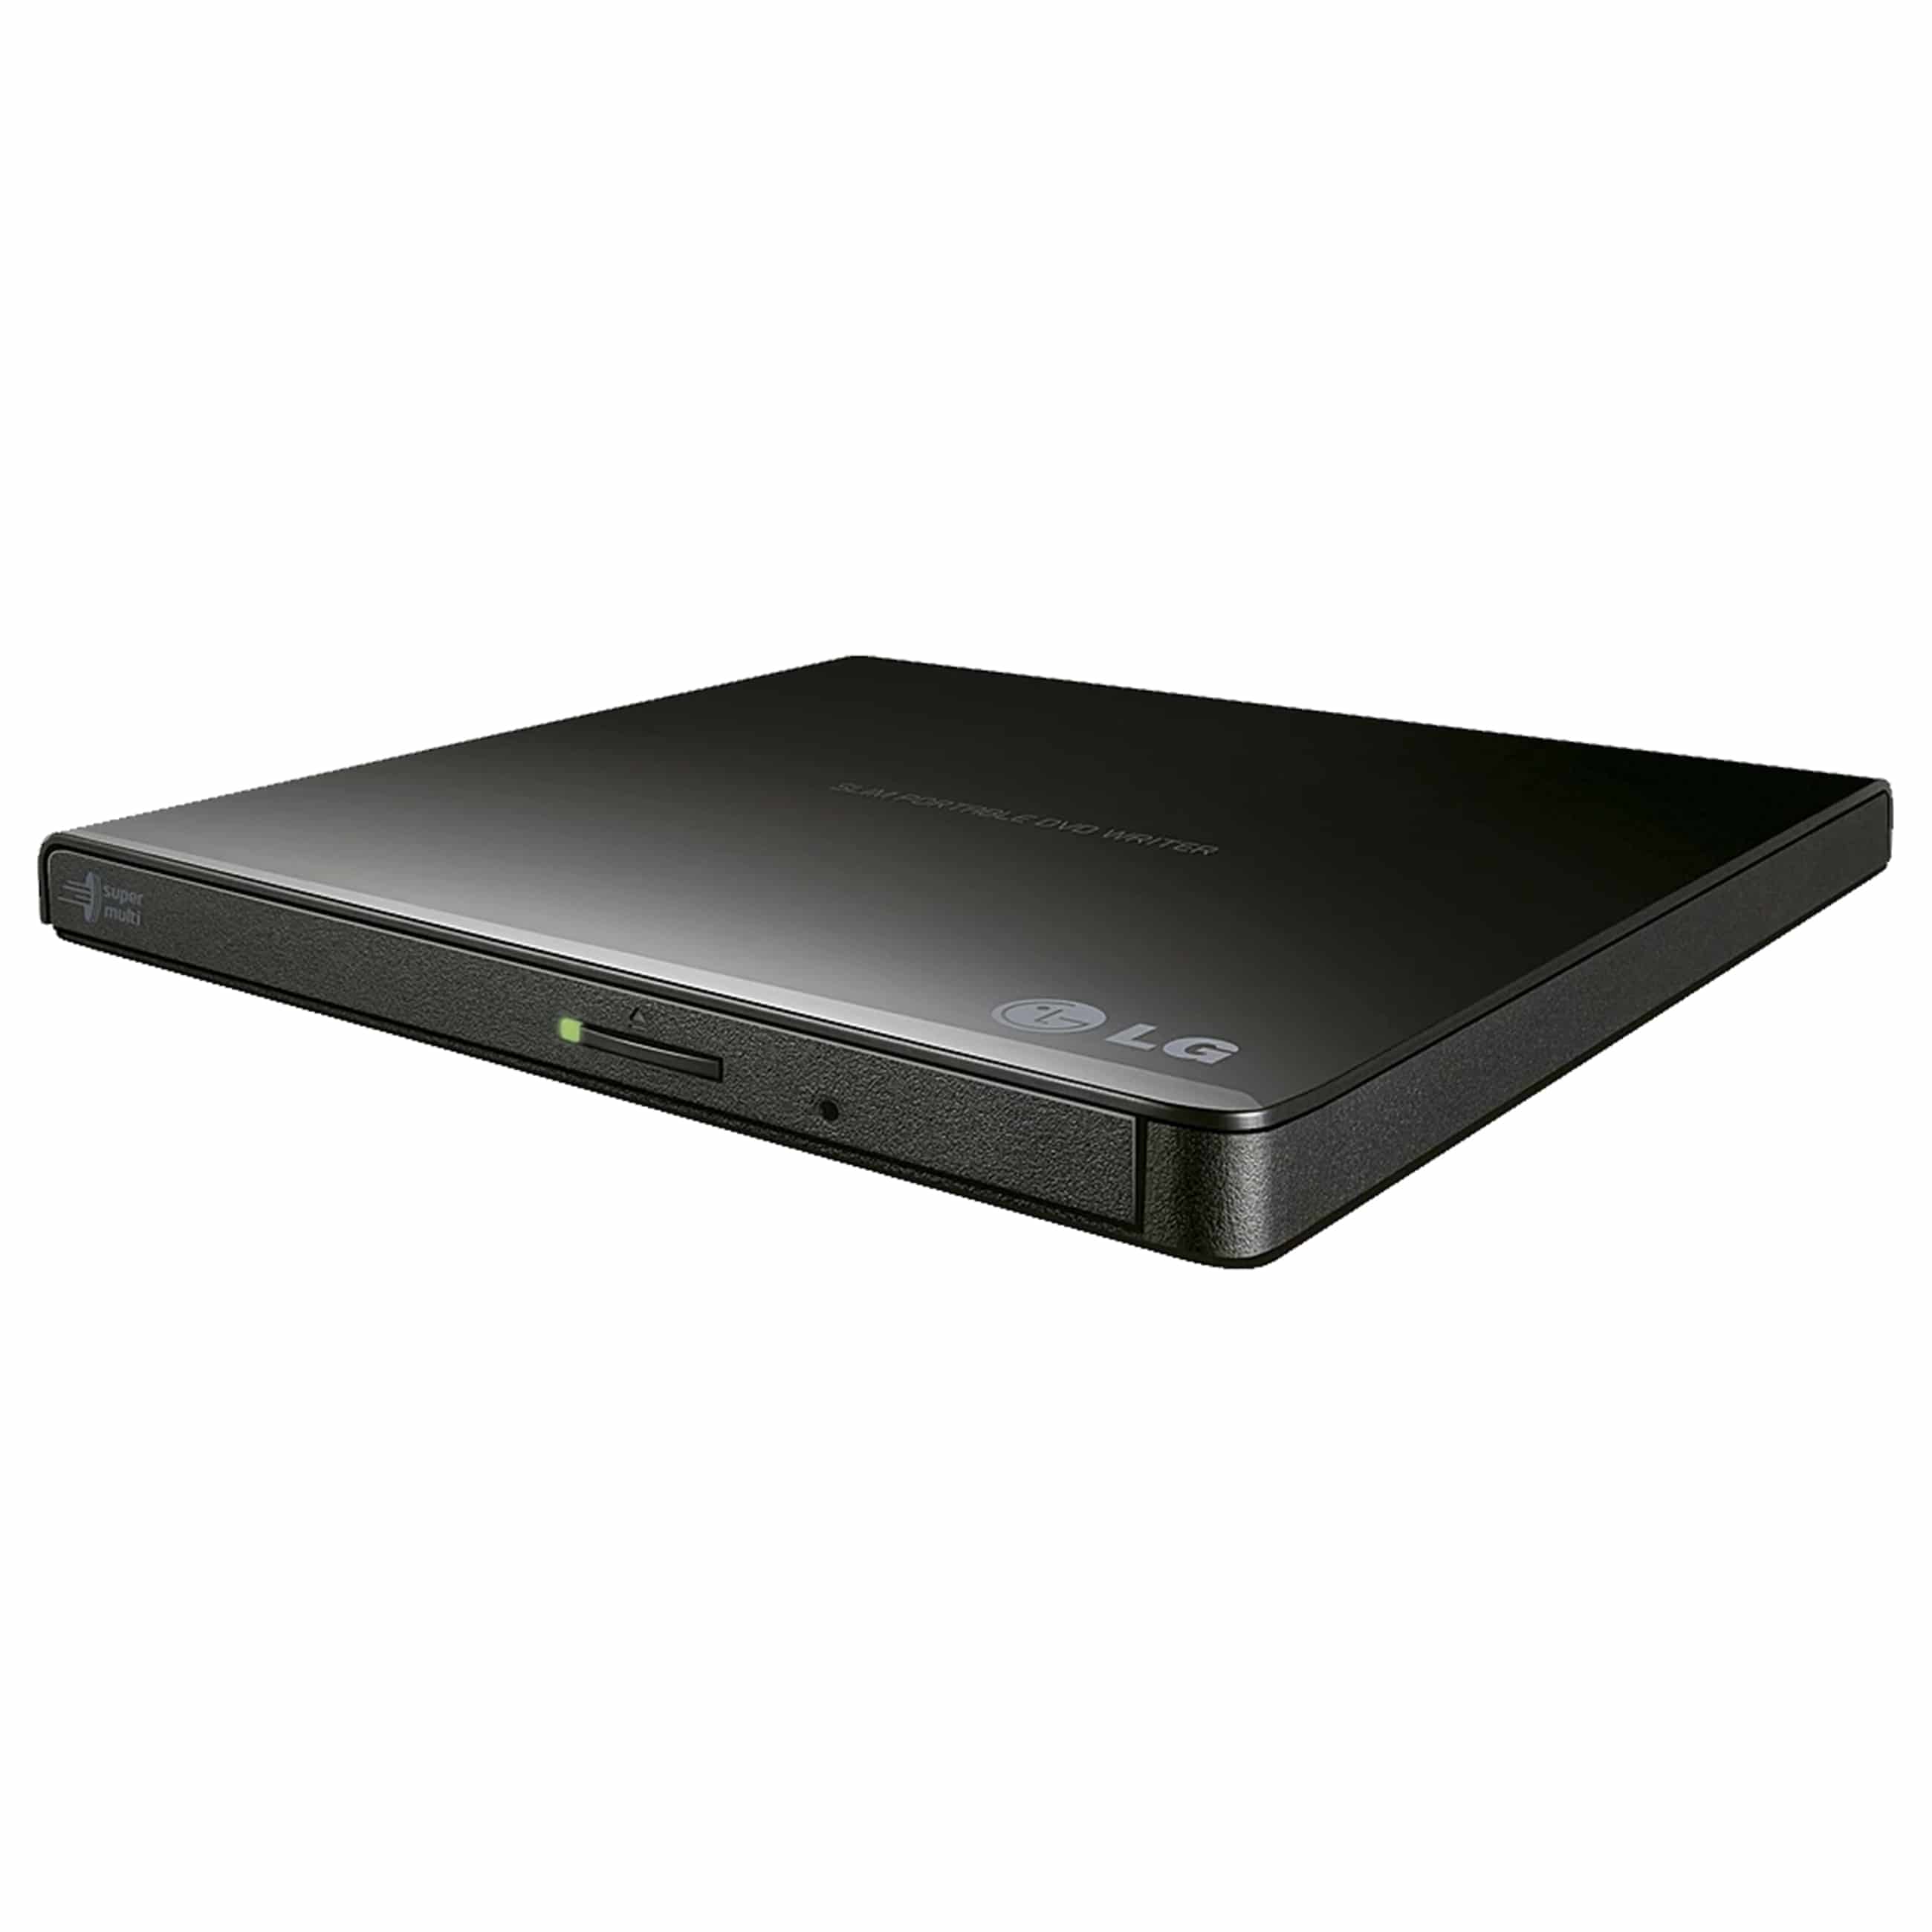 LG GP57EB40 externer DVD-Brenner - Schwarz - Neu